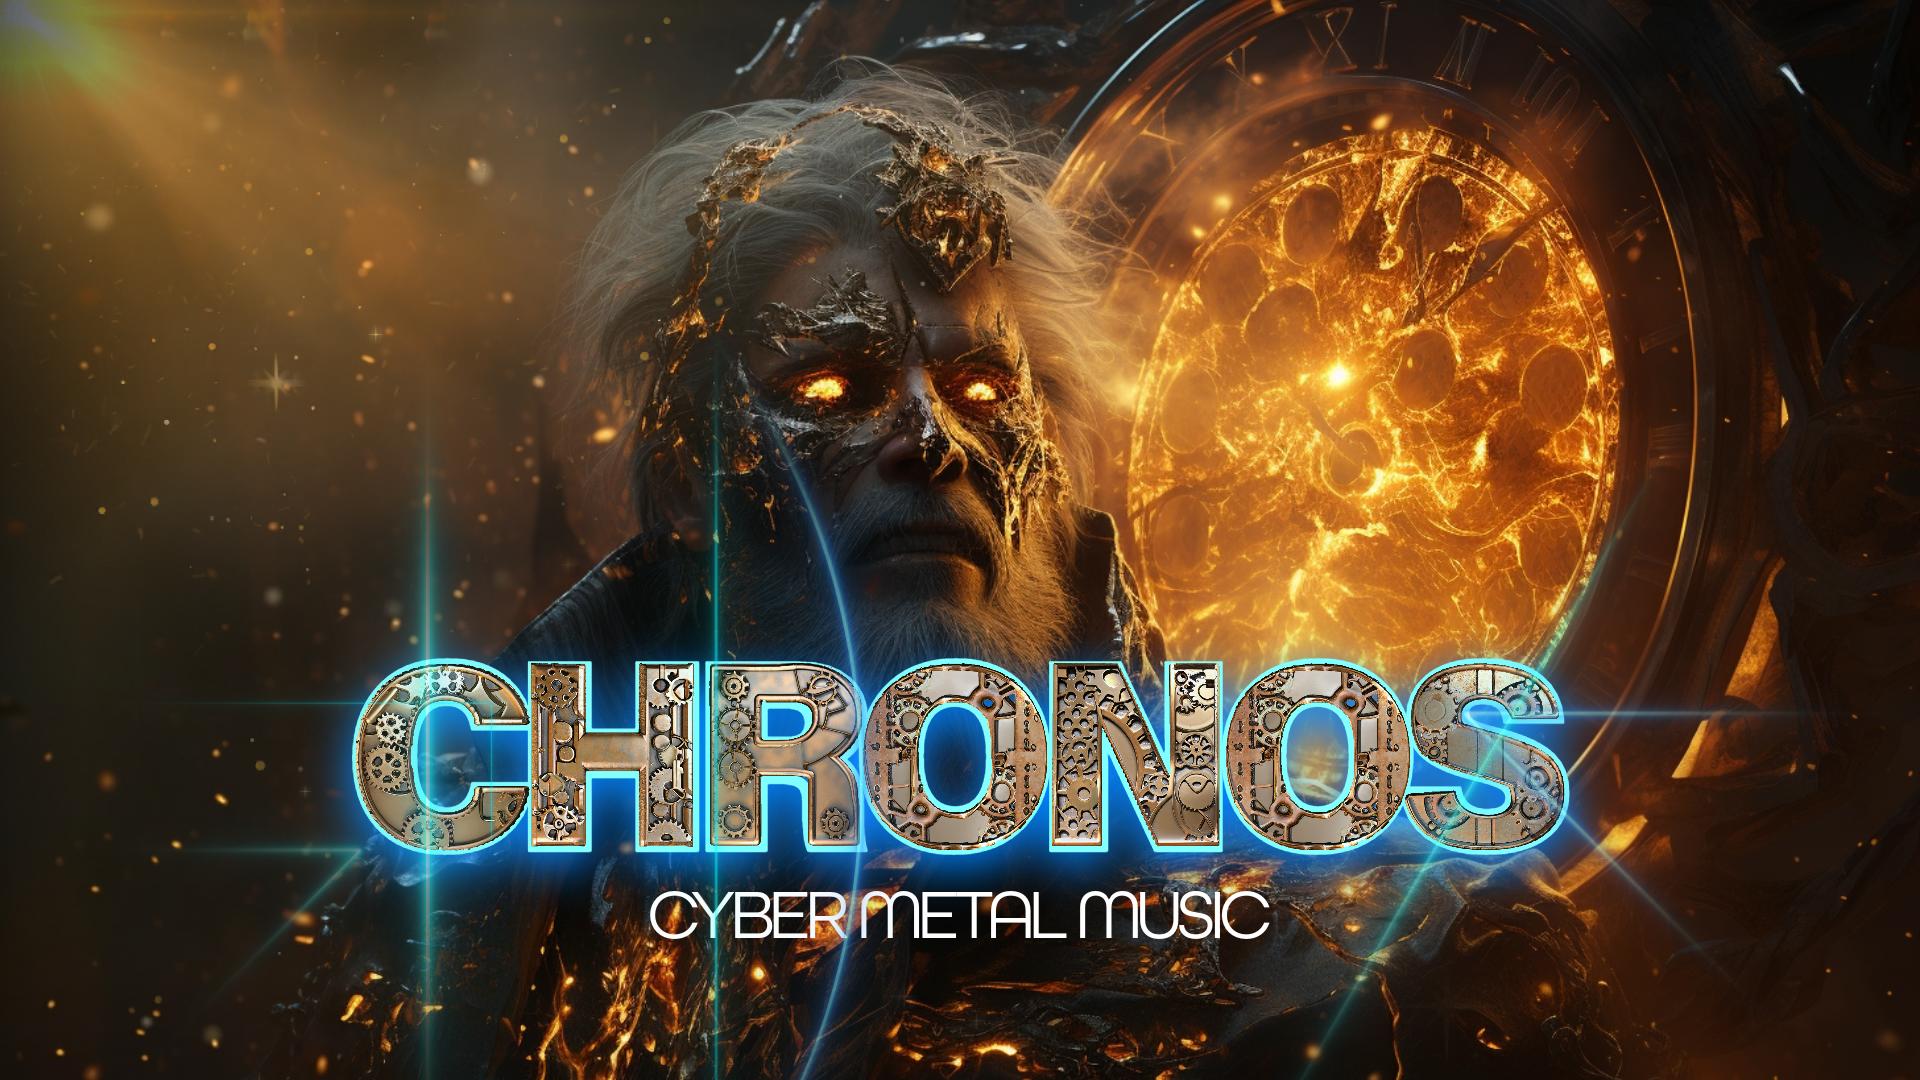 Cyber Metal Music: Chronos